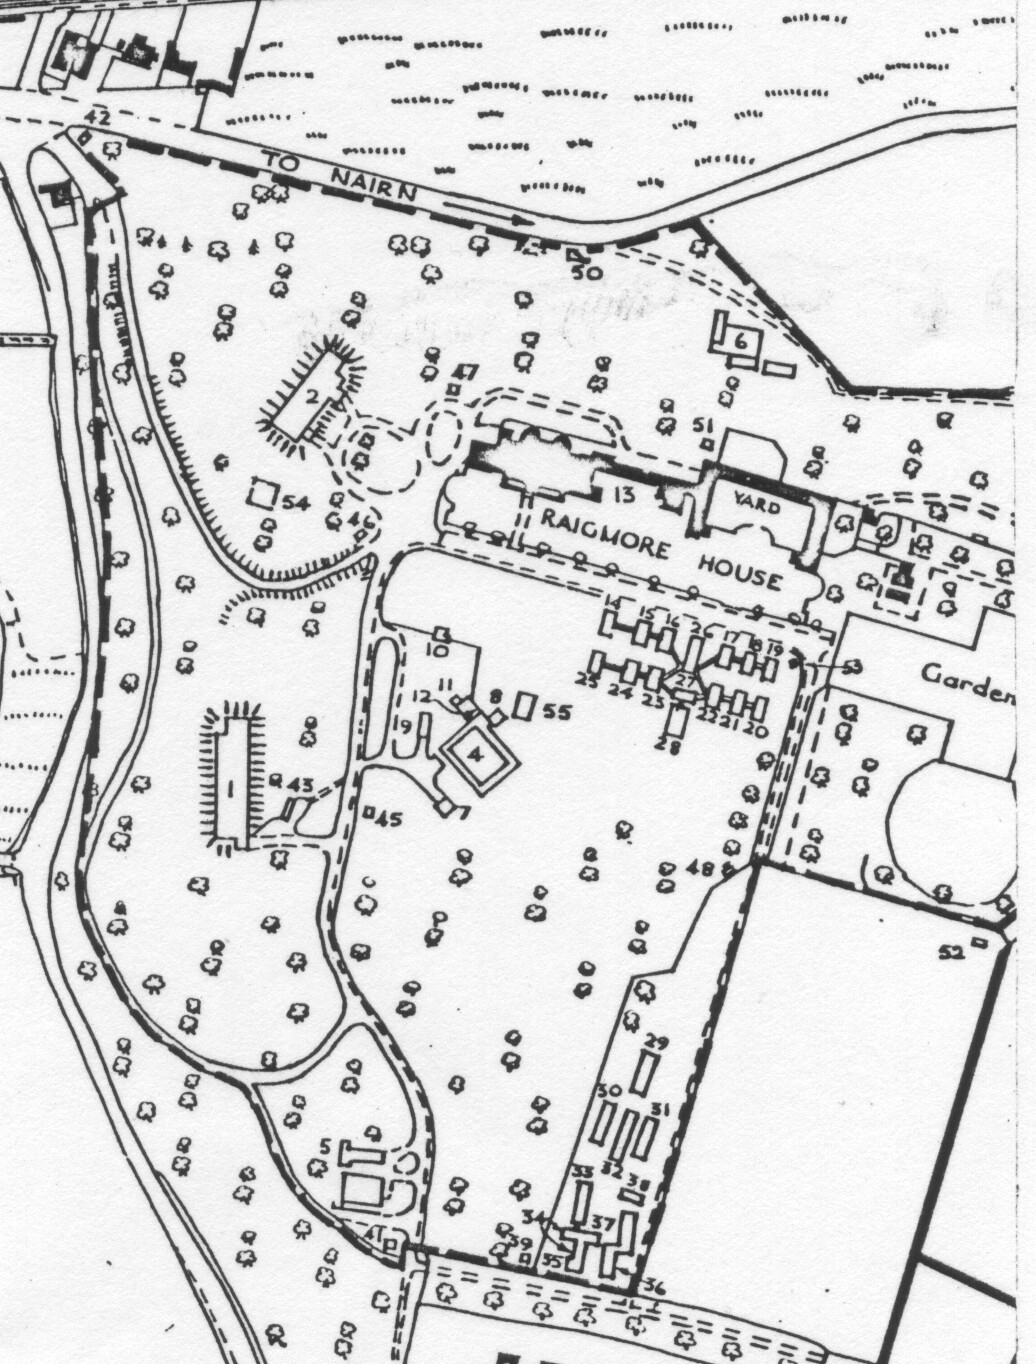 Raigmore Bunker - plan of area 1940s